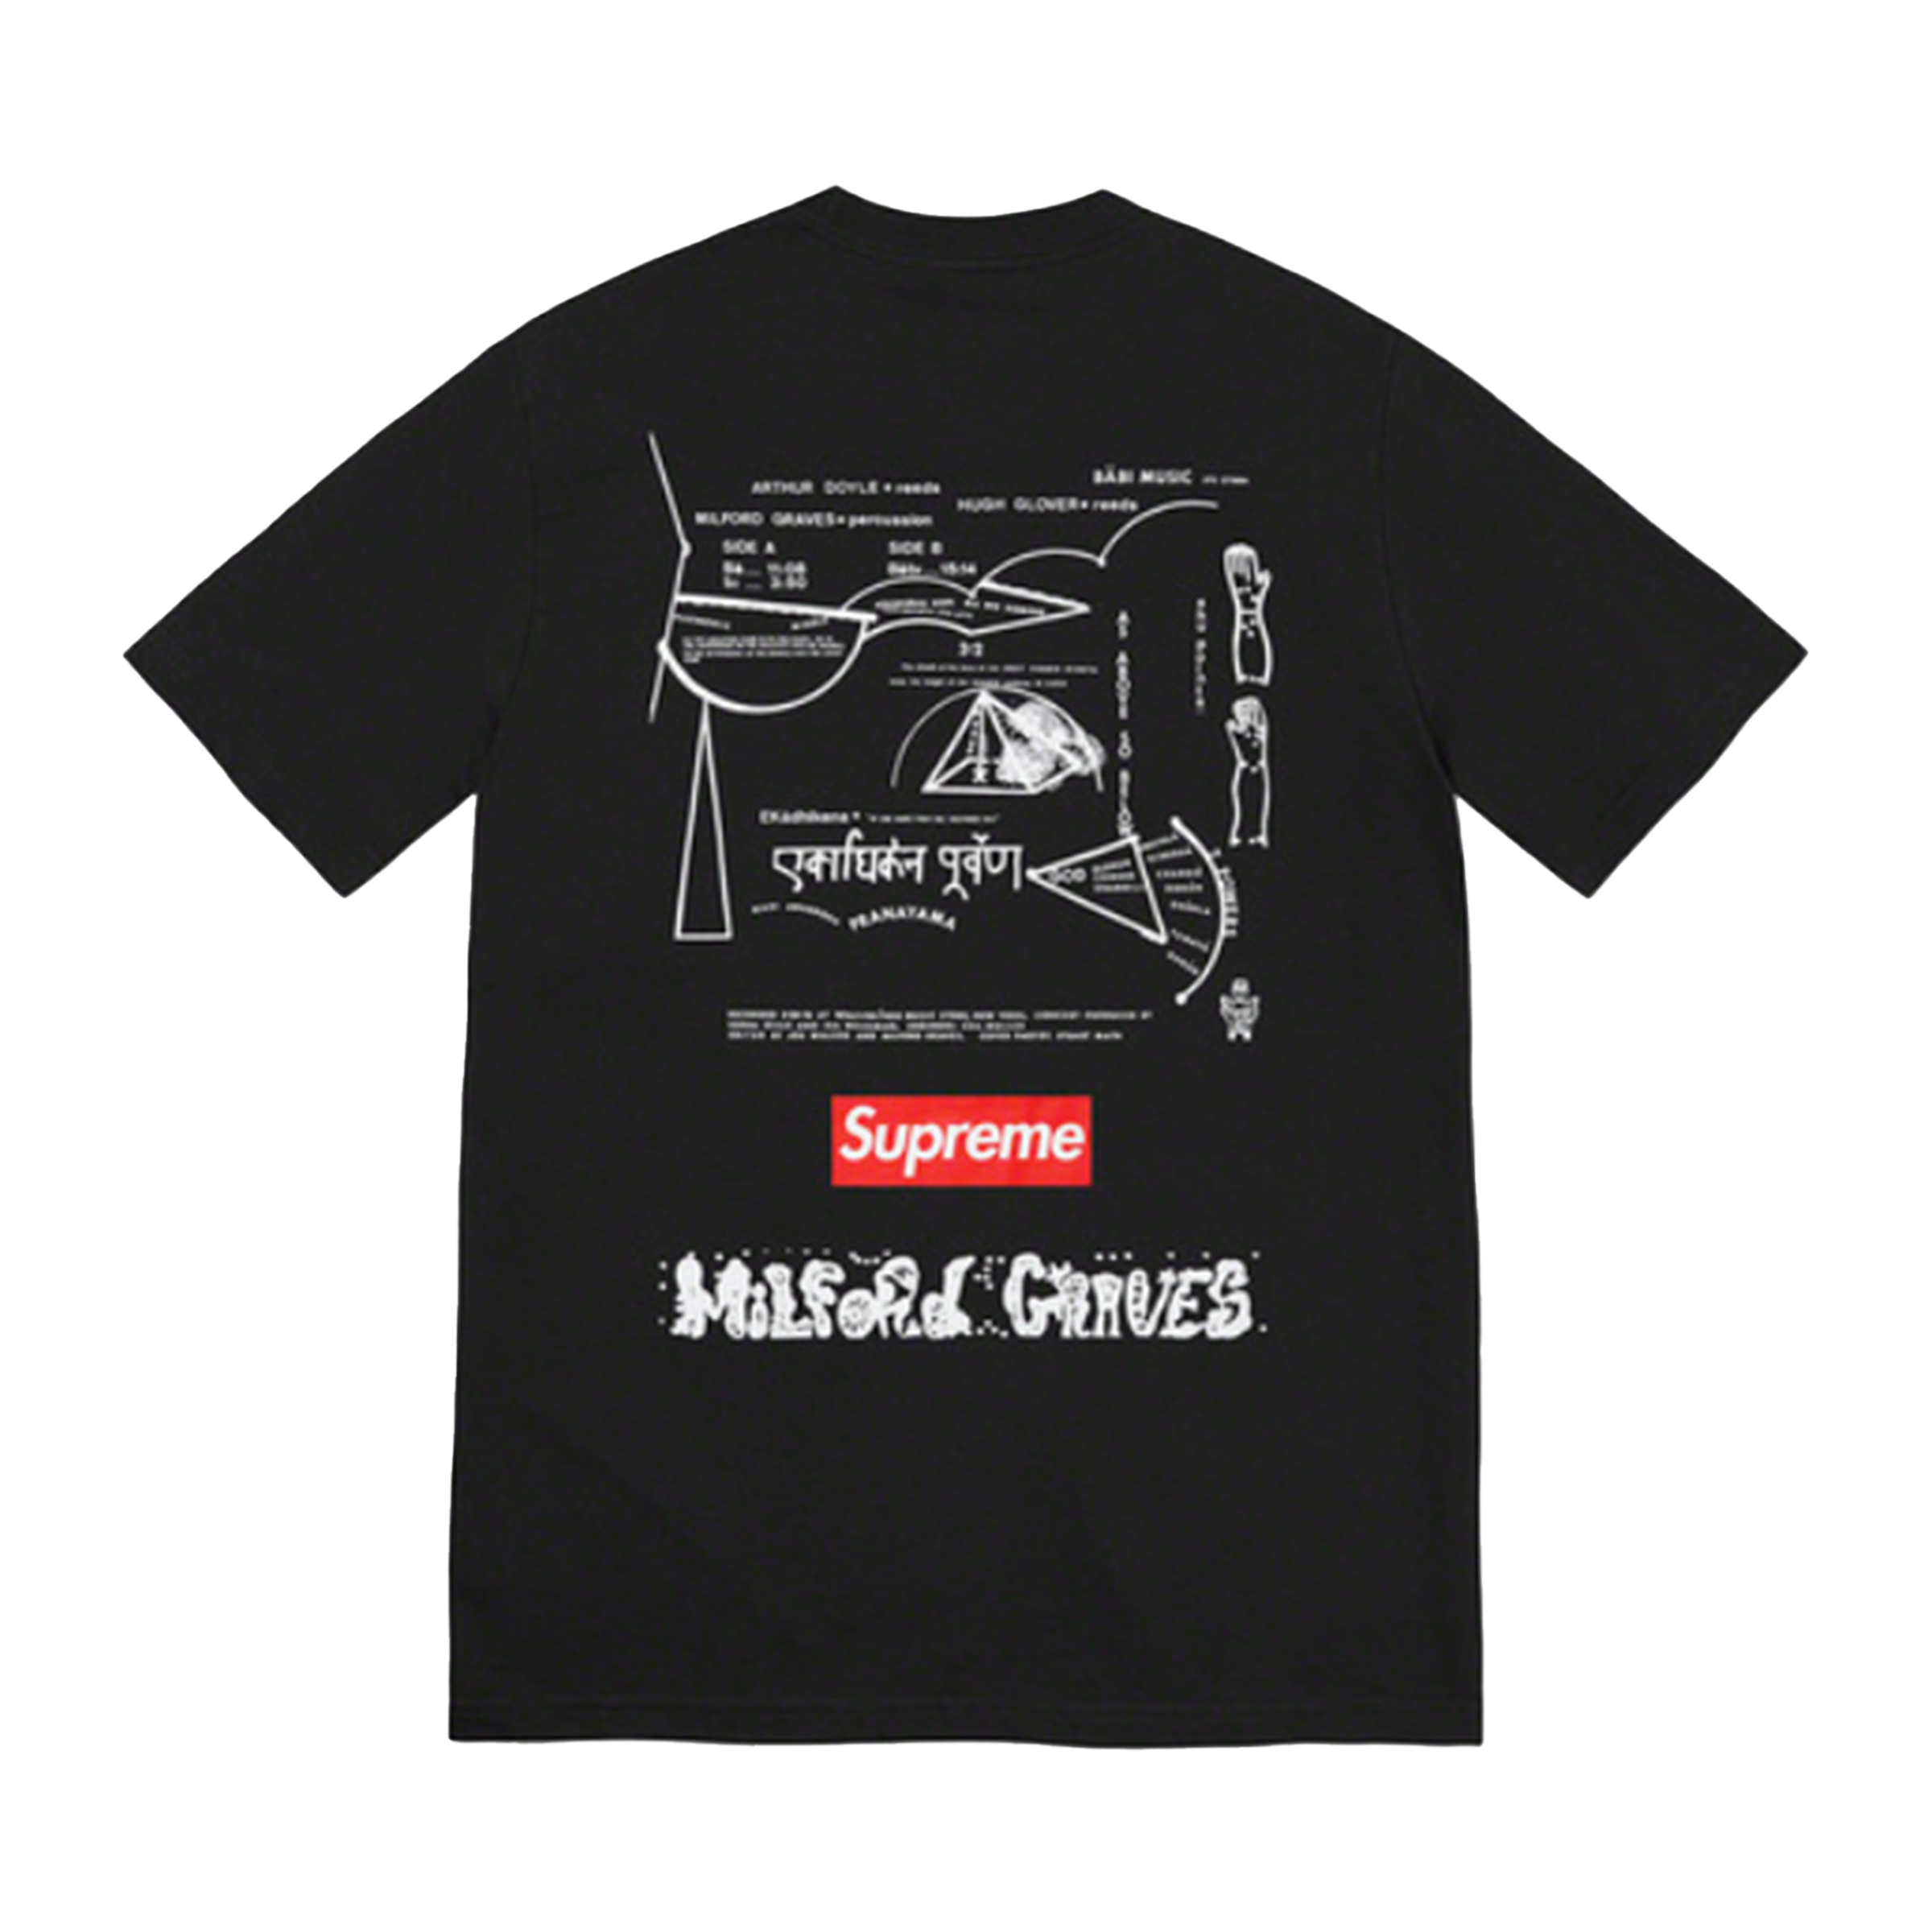 Supreme "Milford Graves" - T-Shirt